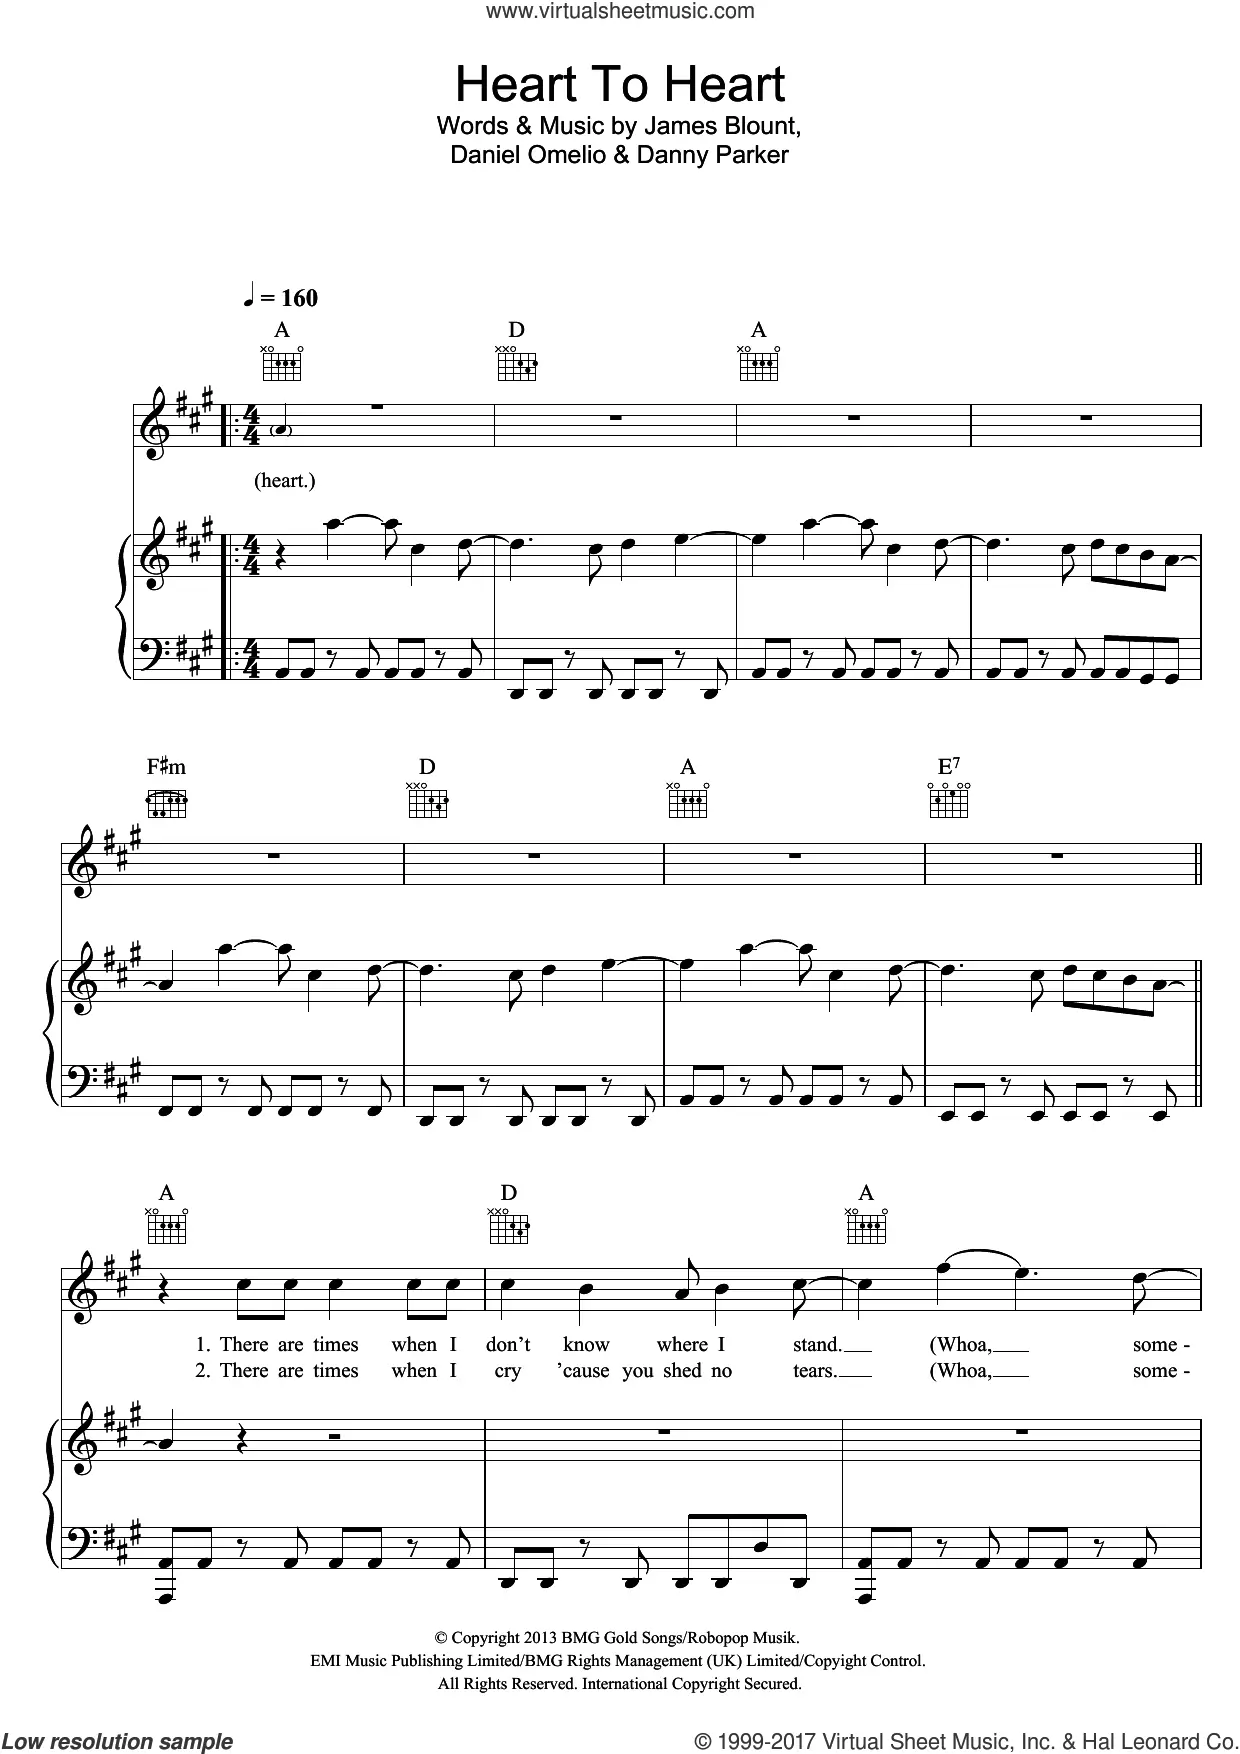 James Blunt Monsters Sheet Music in Eb Major (transposable) - Download &  Print - SKU: MN0207798